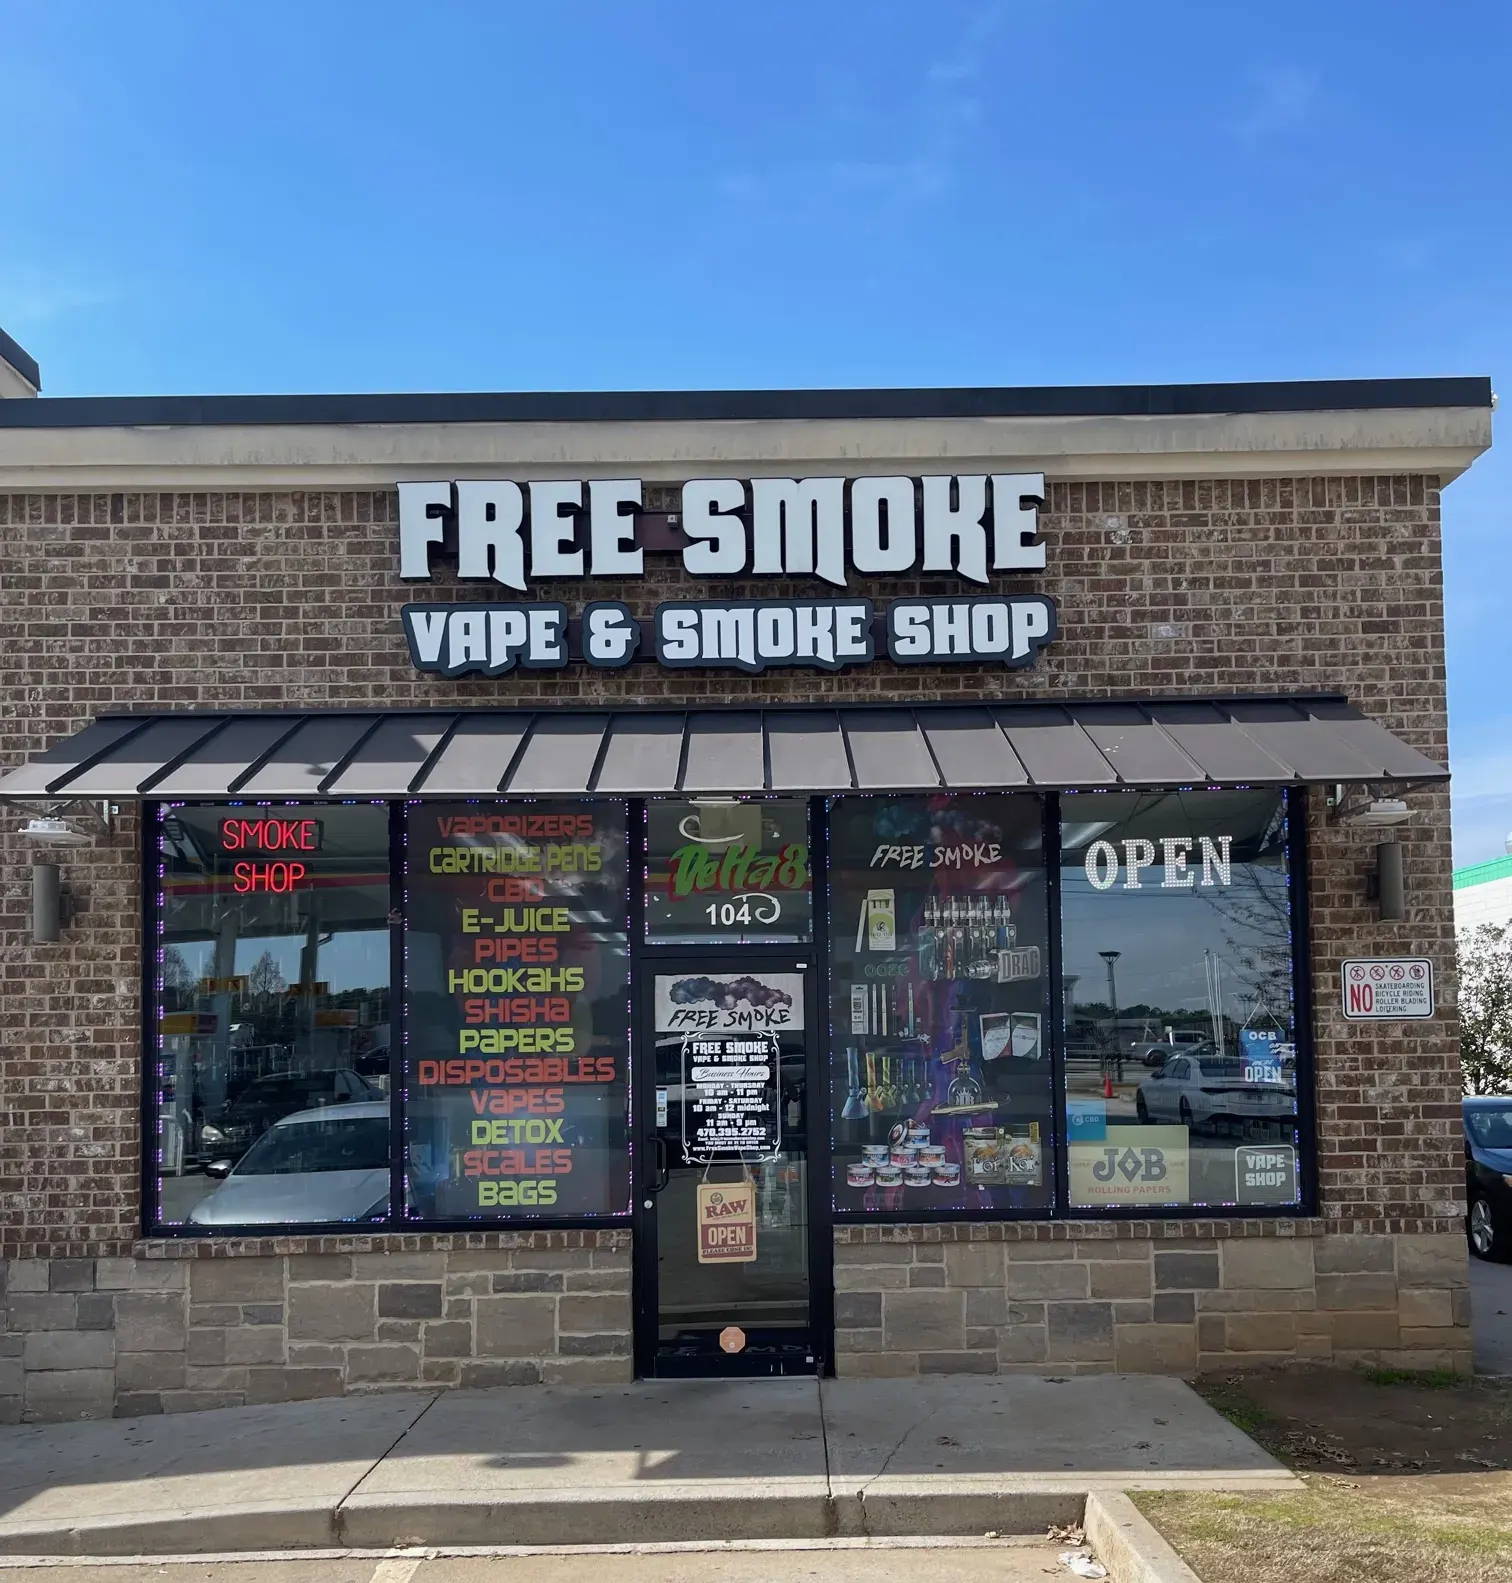 Gwinnett Village Free Smoke Vape Shop on Jimmy Carter Blvd